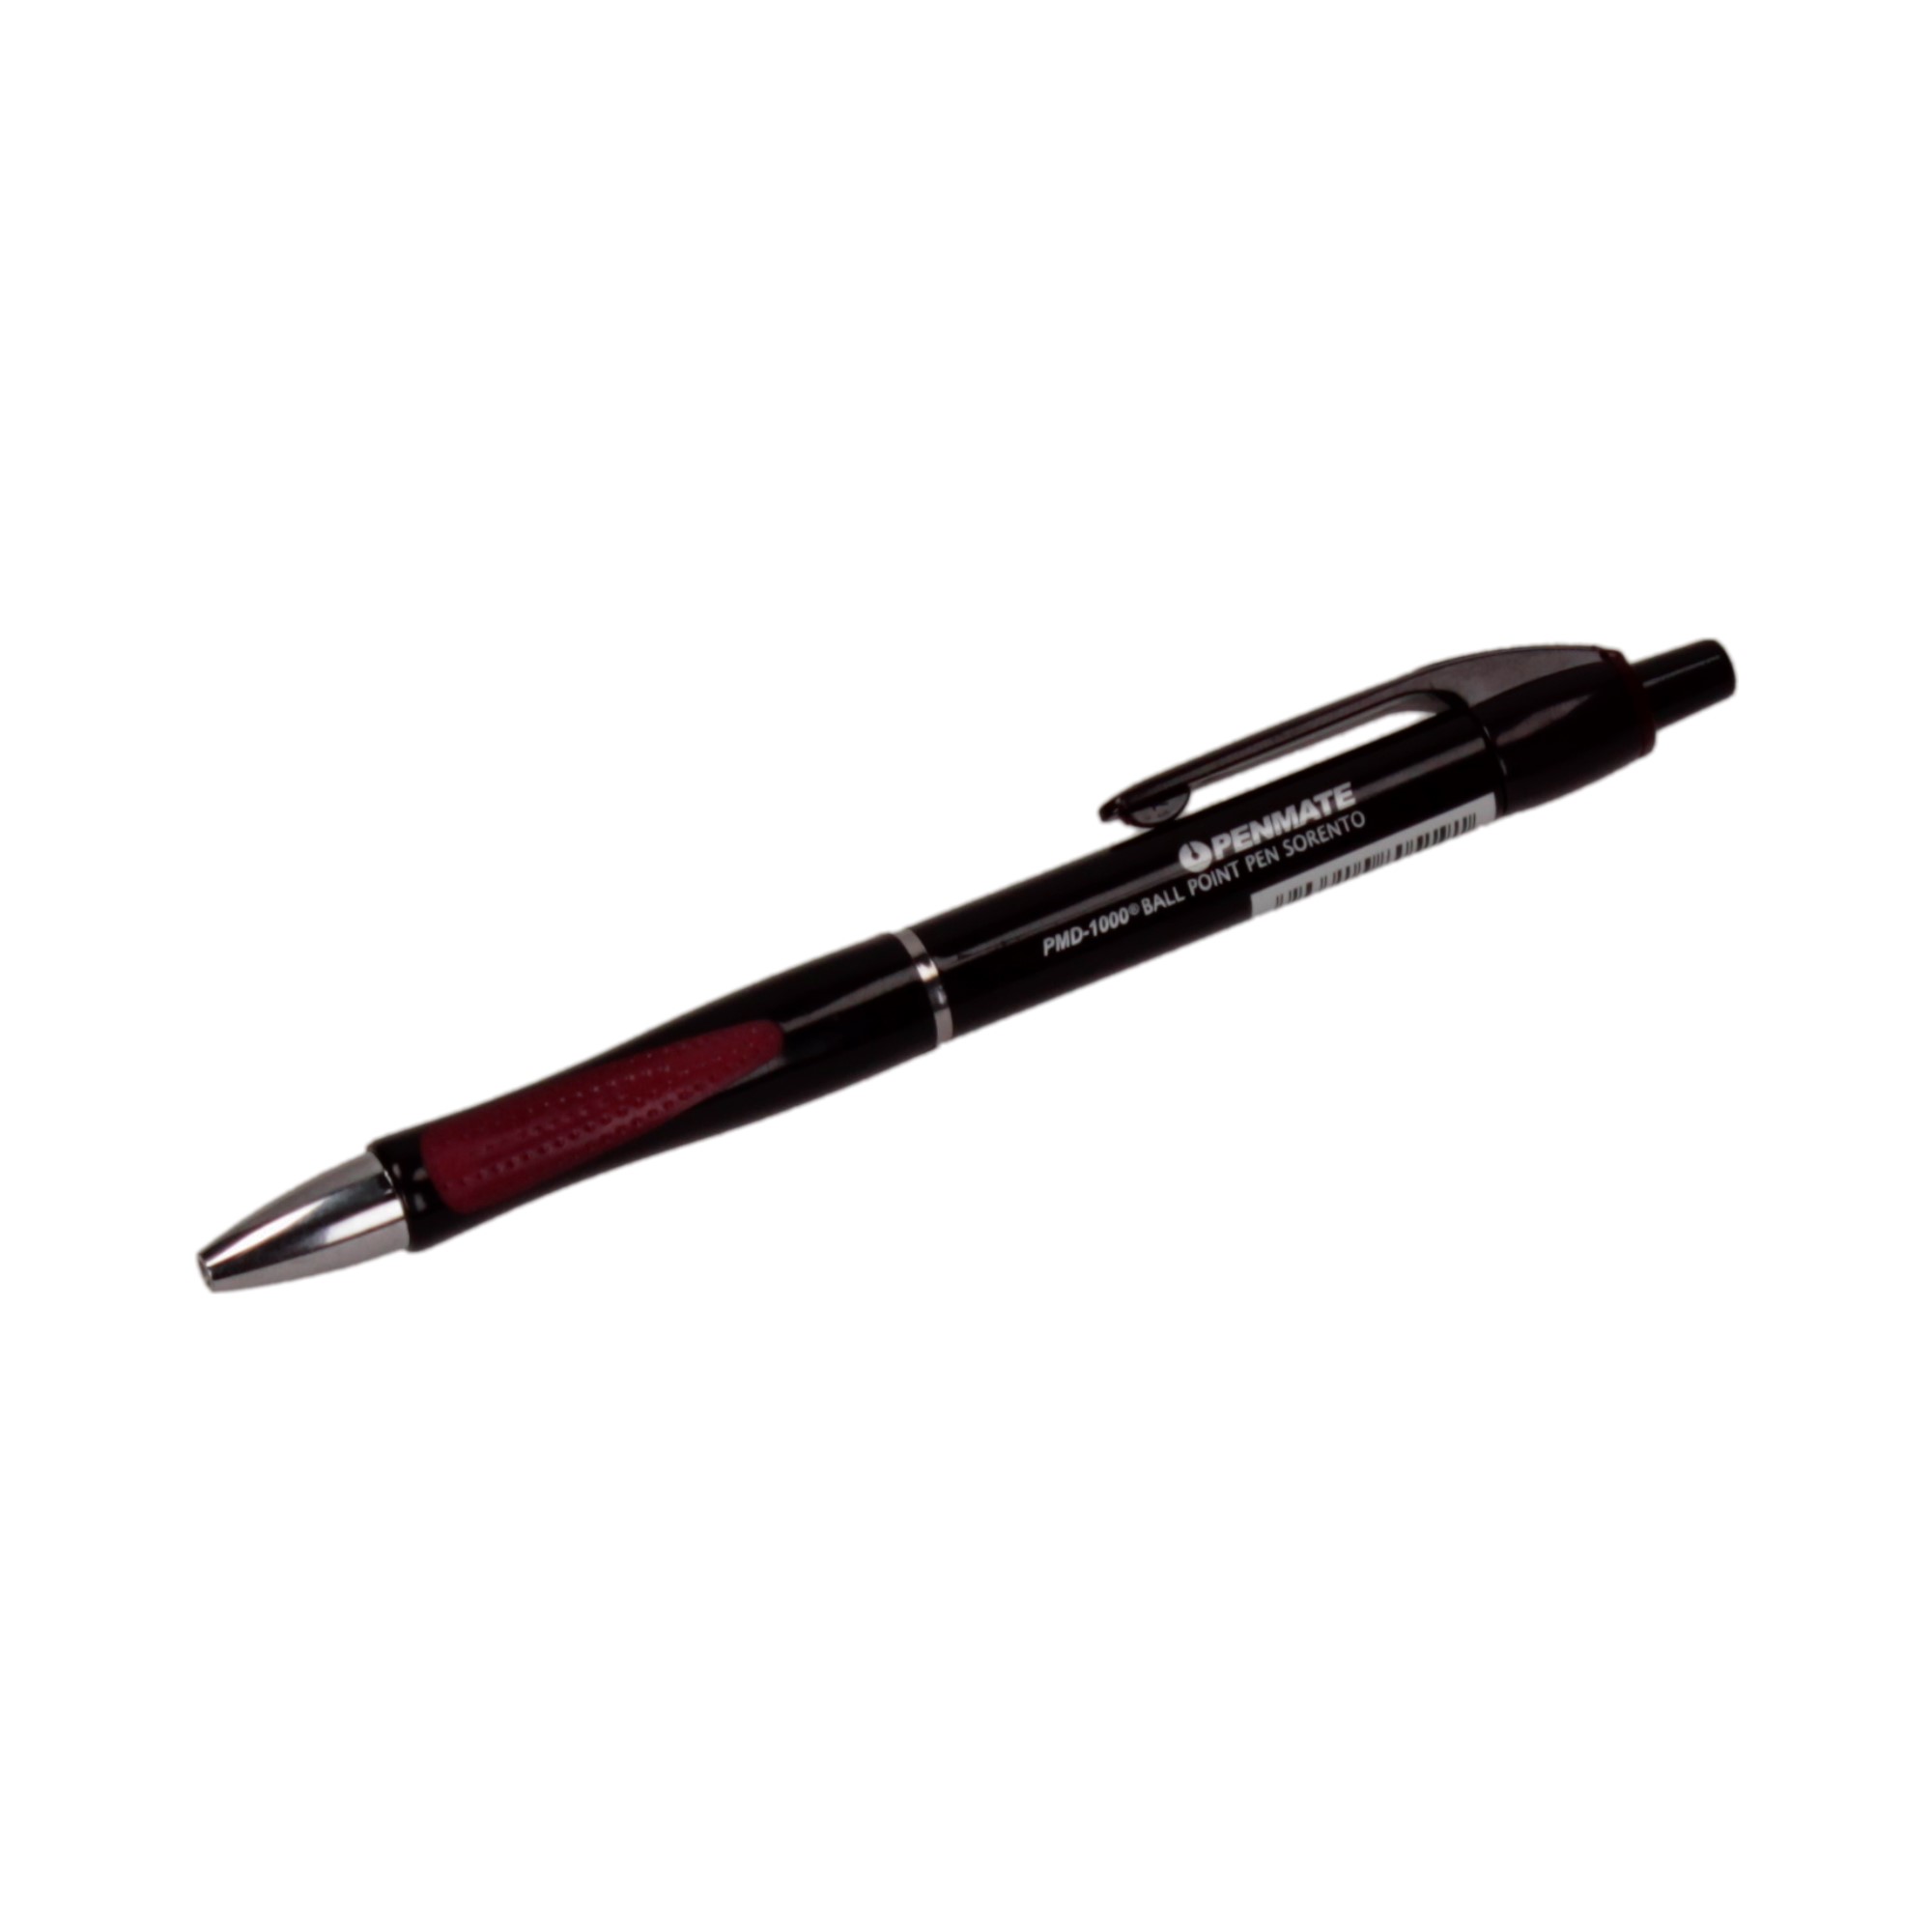 Penmate Długopis Sorento PMB-1000